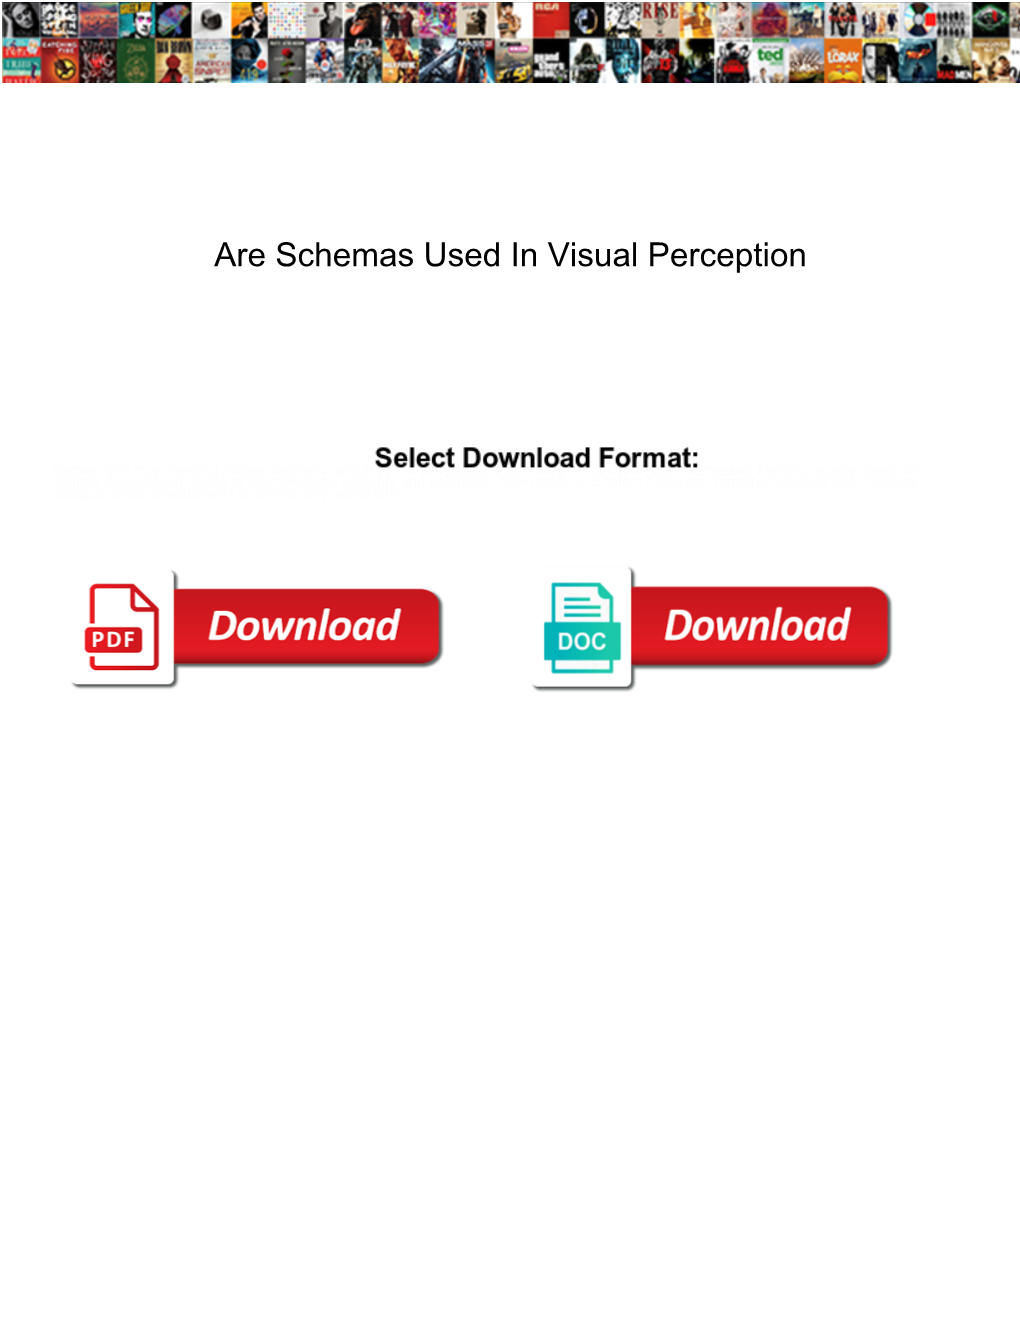 Are Schemas Used in Visual Perception